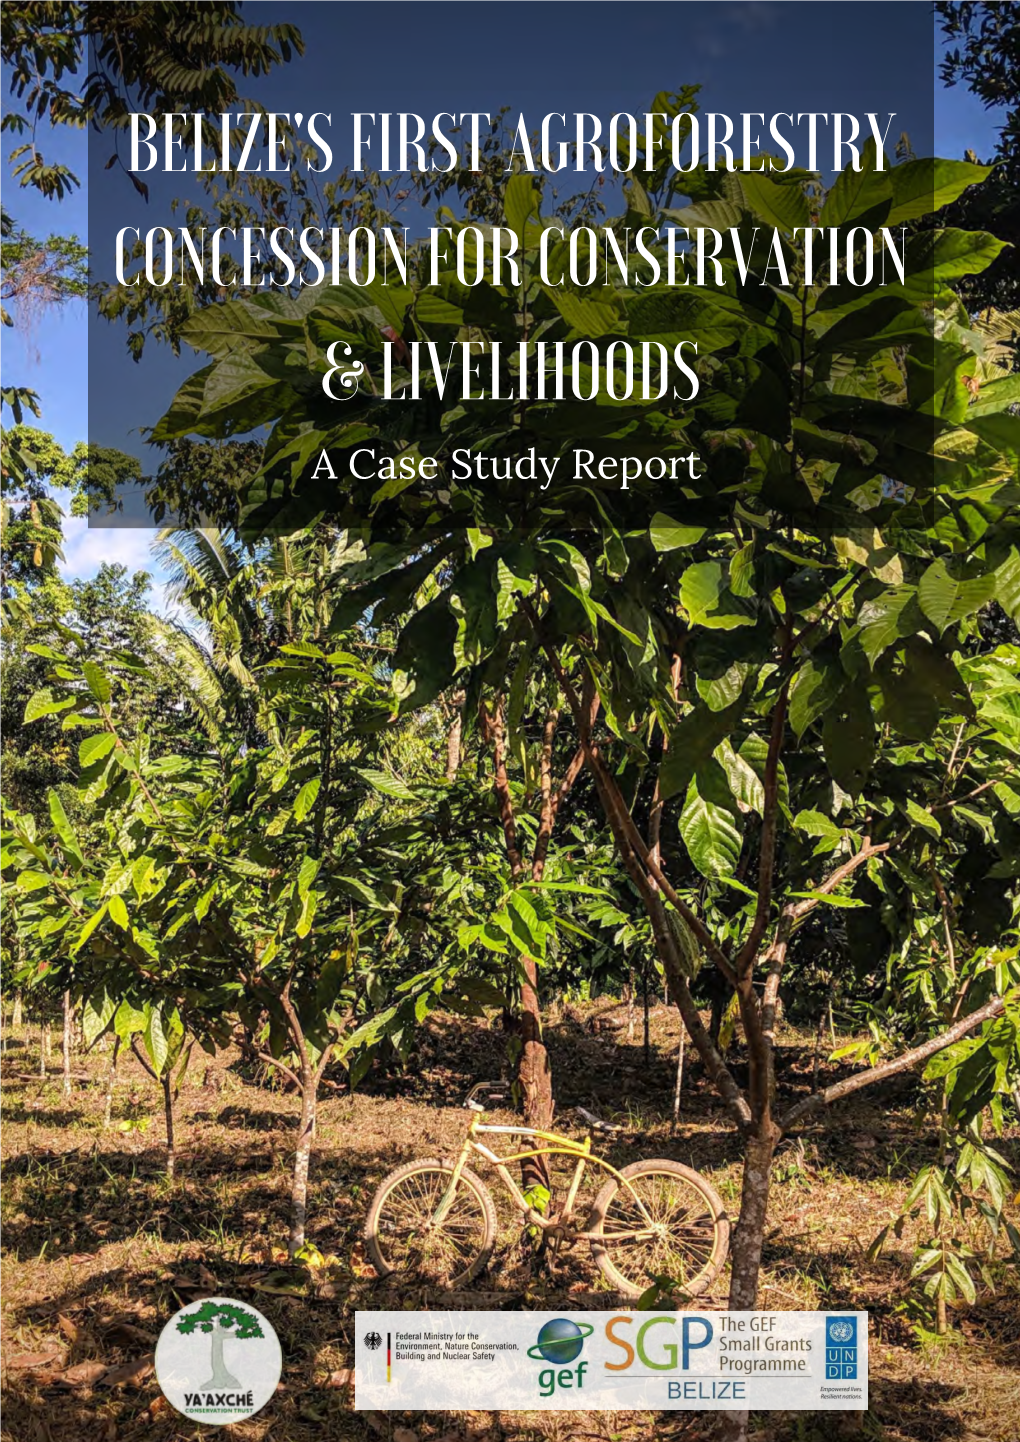 Belize's First Agroforestry Concession for Conservation & Livelihoods